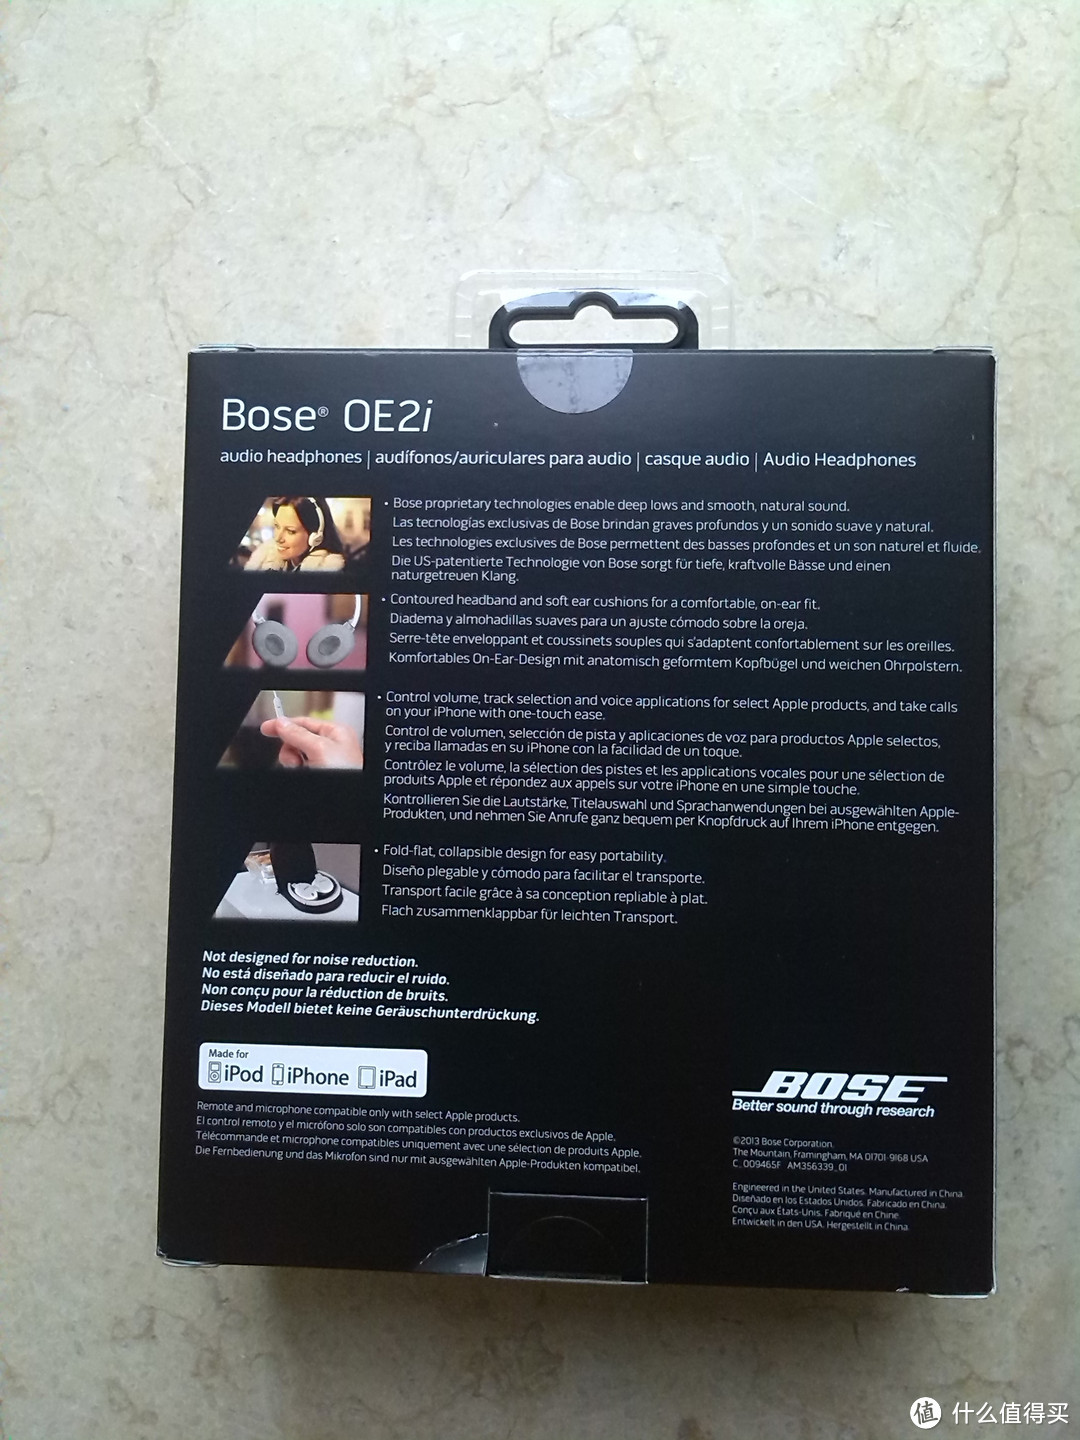 Bose 博士 OE2i 头戴式耳机 的奇幻旅程